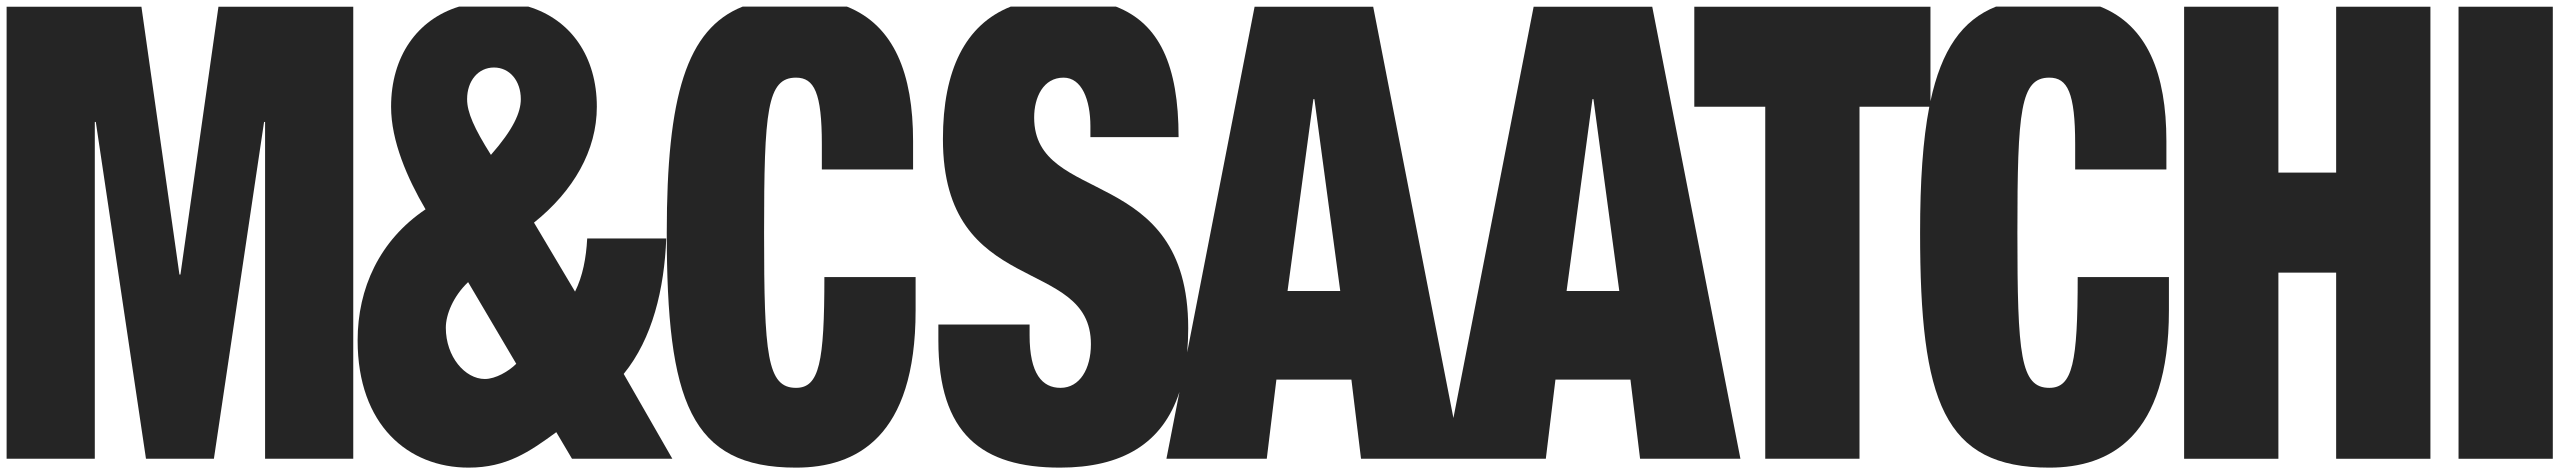 2560px-M&C_Saatchi_logo.svg